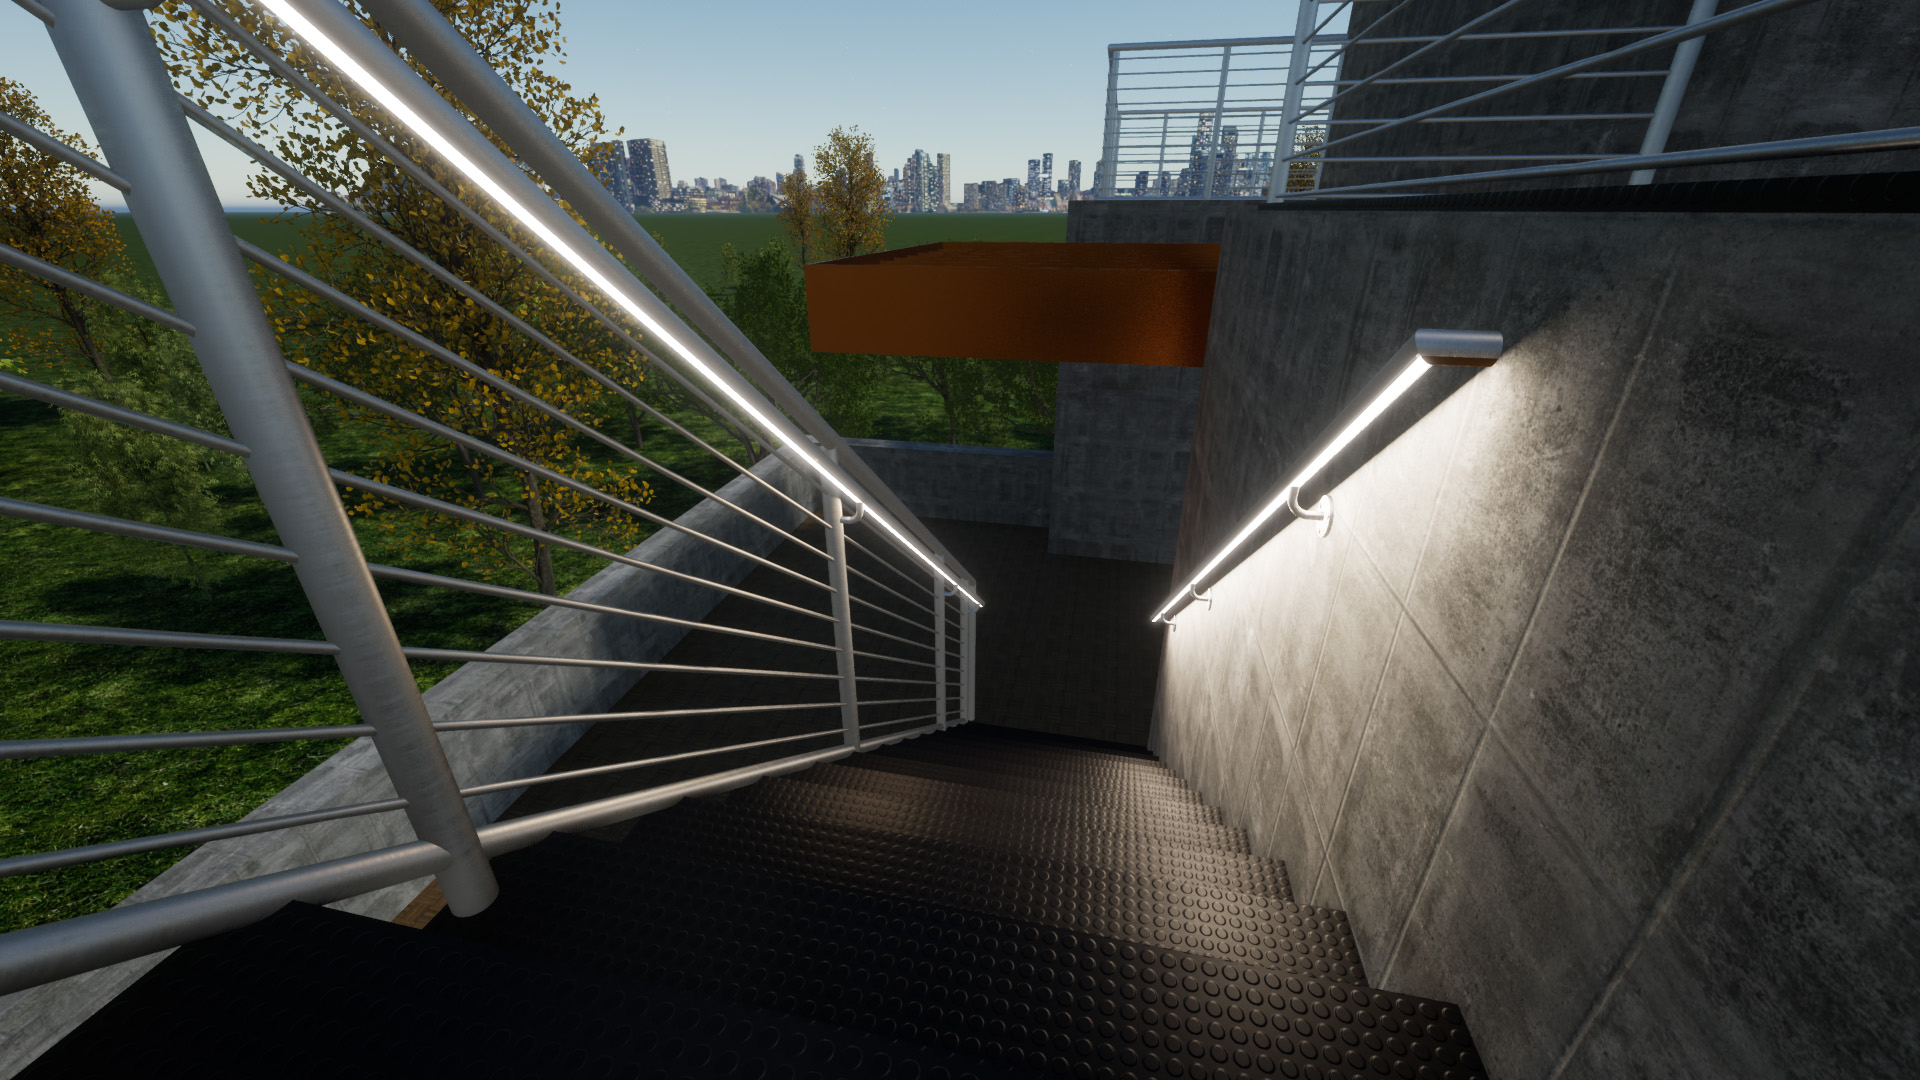 Lighted-handrail-6.jpg